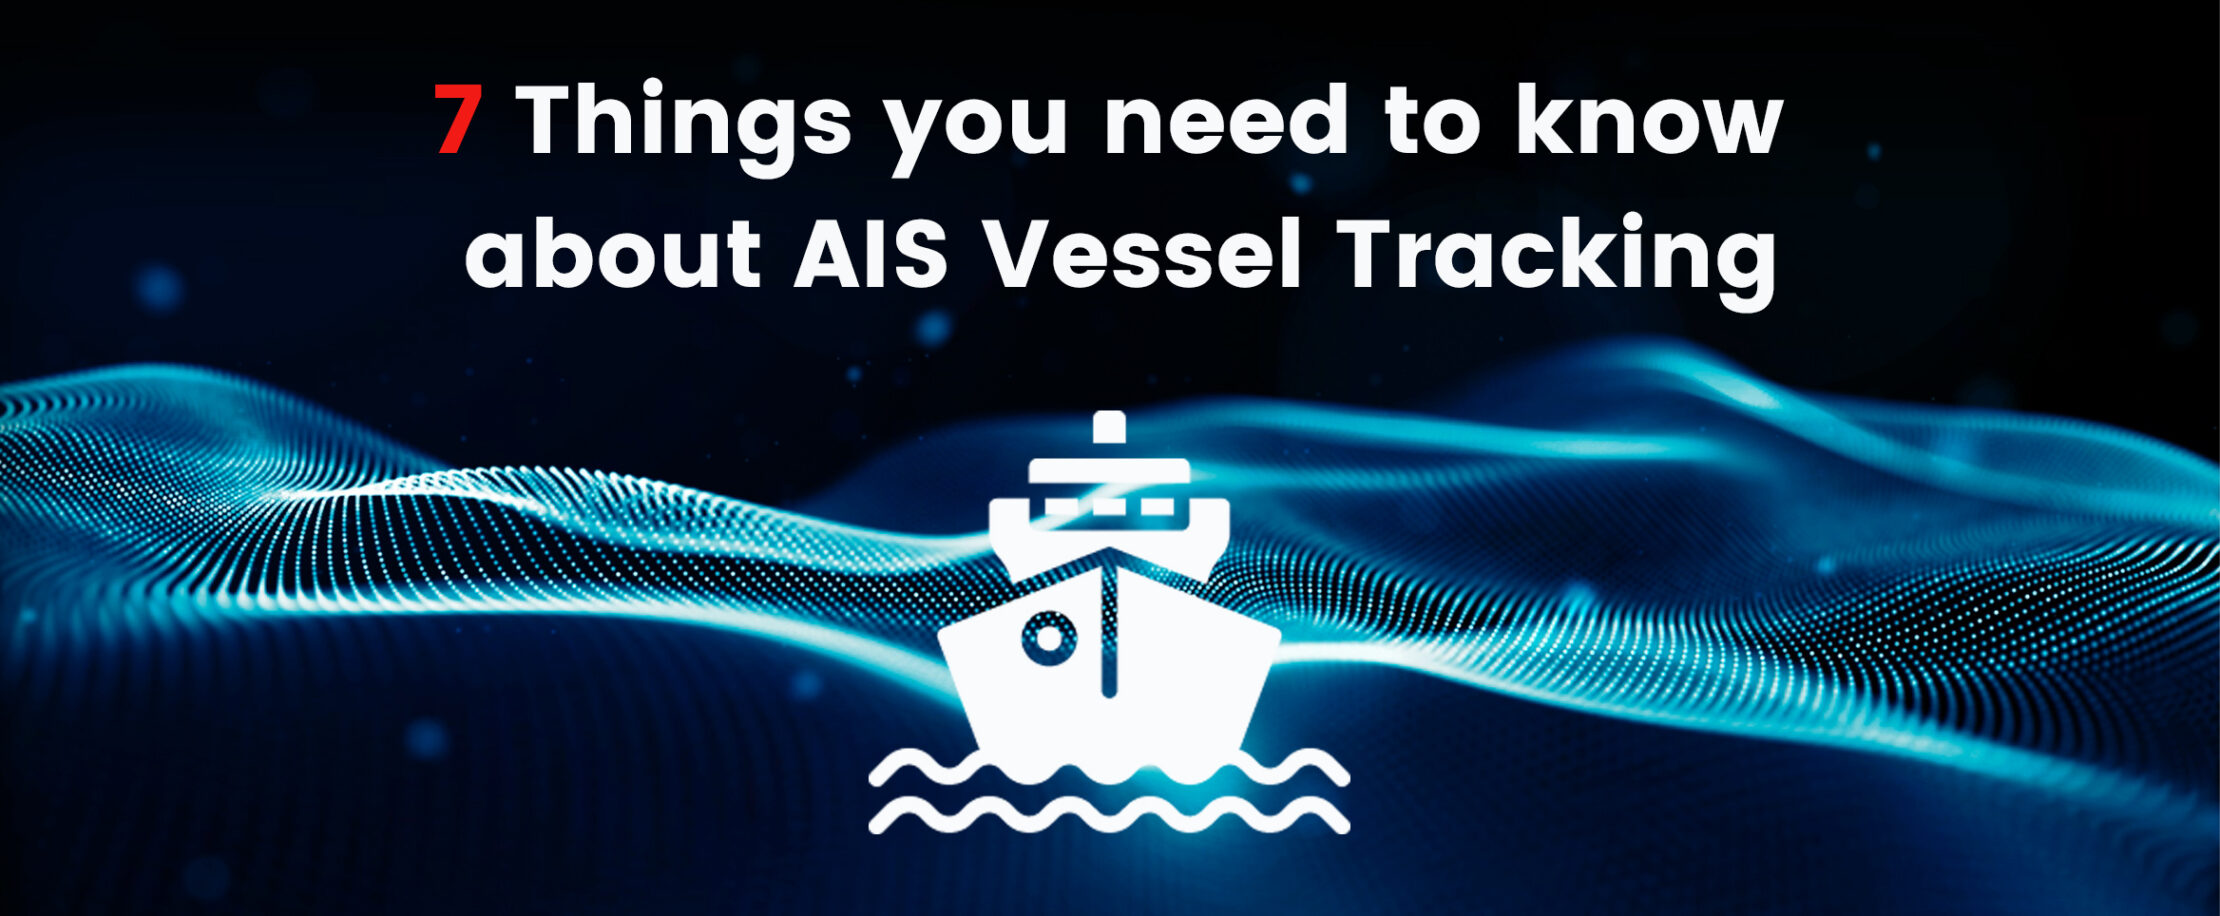 AIS Vessel Tracking by BigoceanData